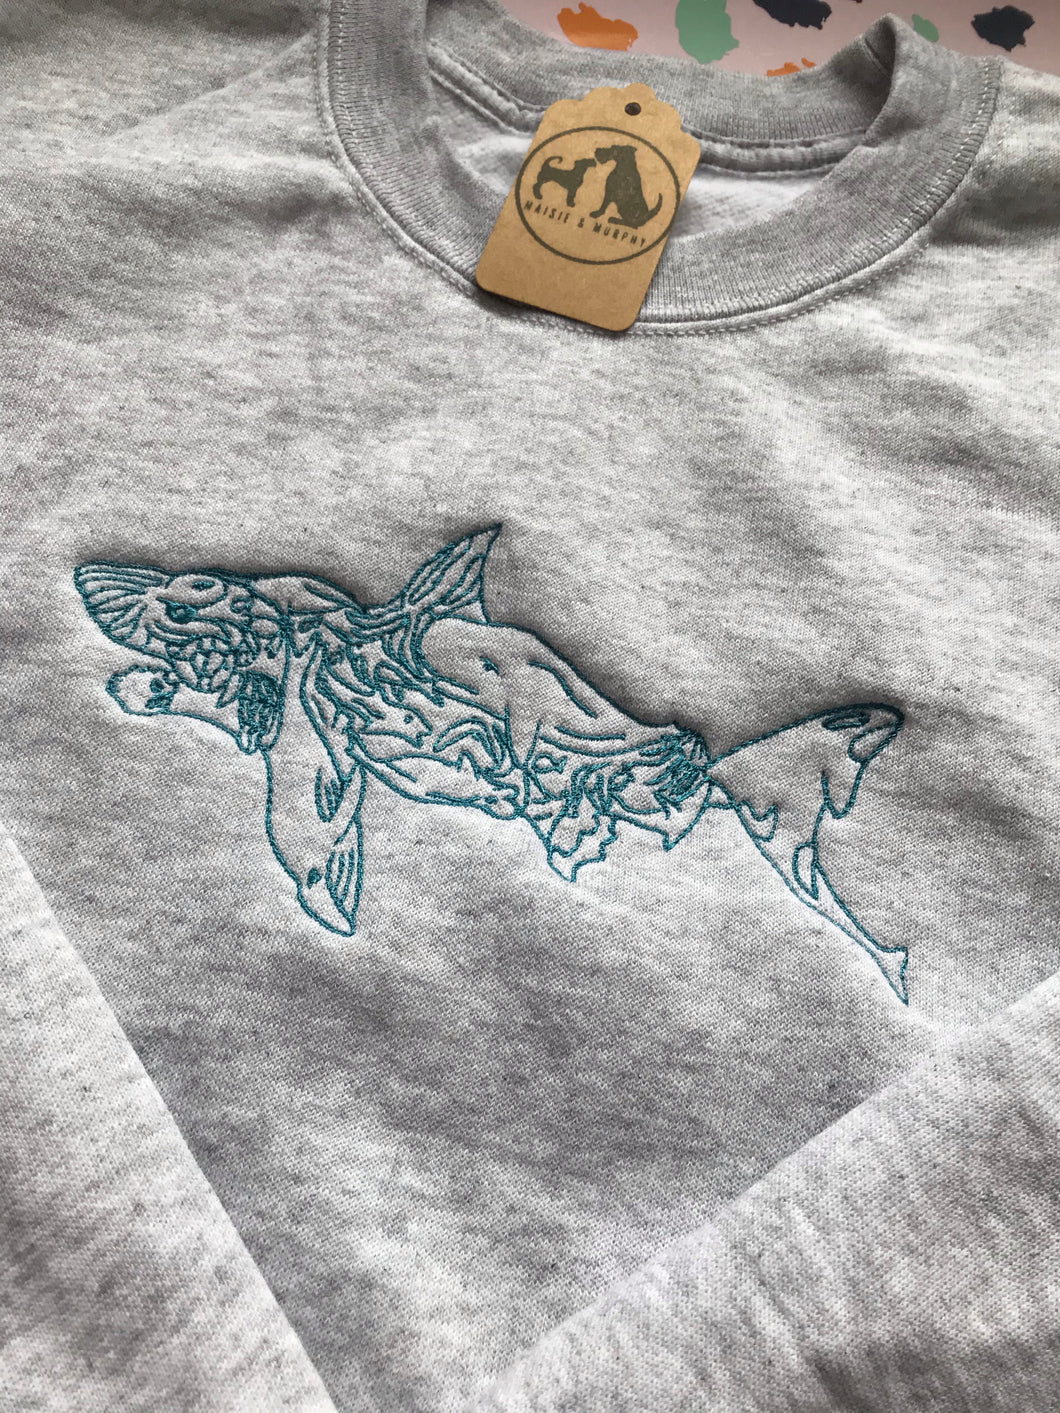 Colourful Shark Sweatshirt - Gifts for Marine Life Lovers